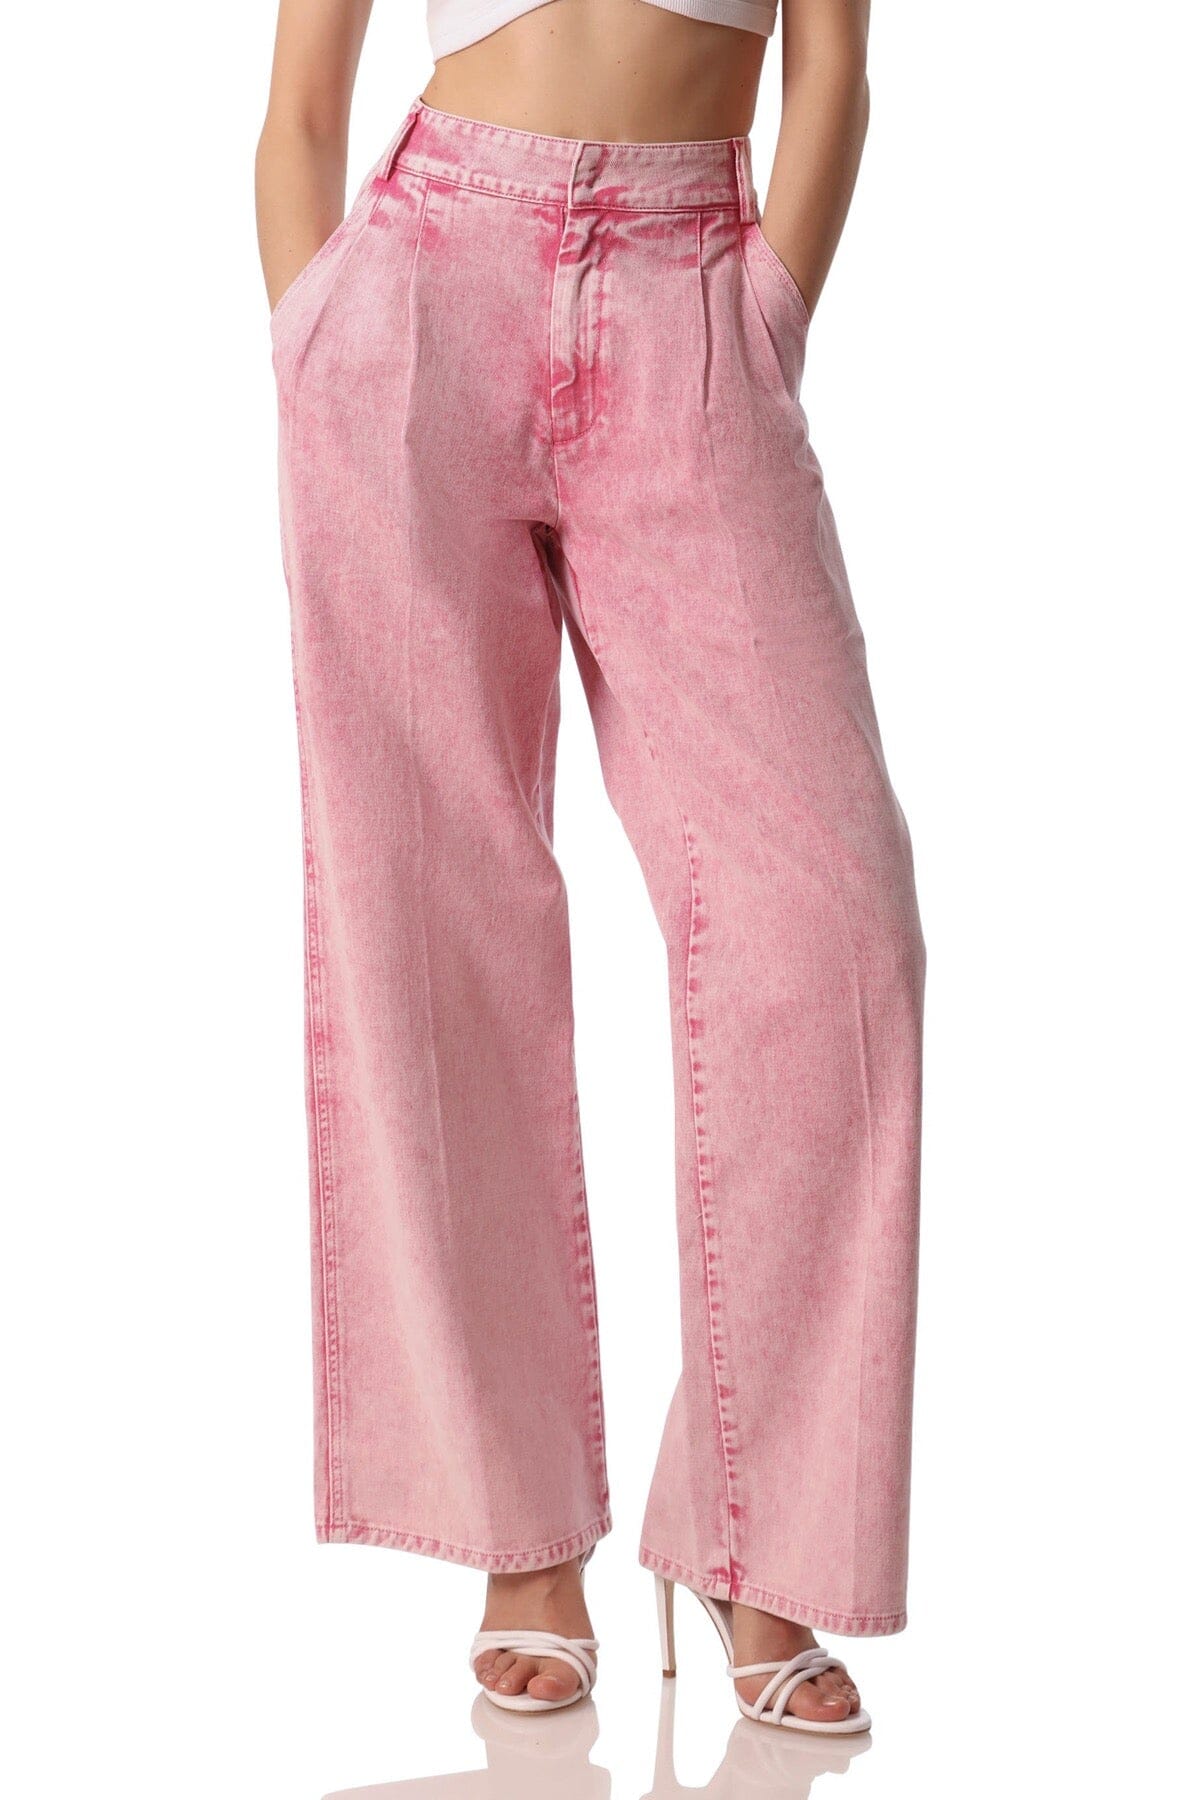 acid wash wide leg high waist denim trouser jeans pink - figure flattering office to date night pants for women